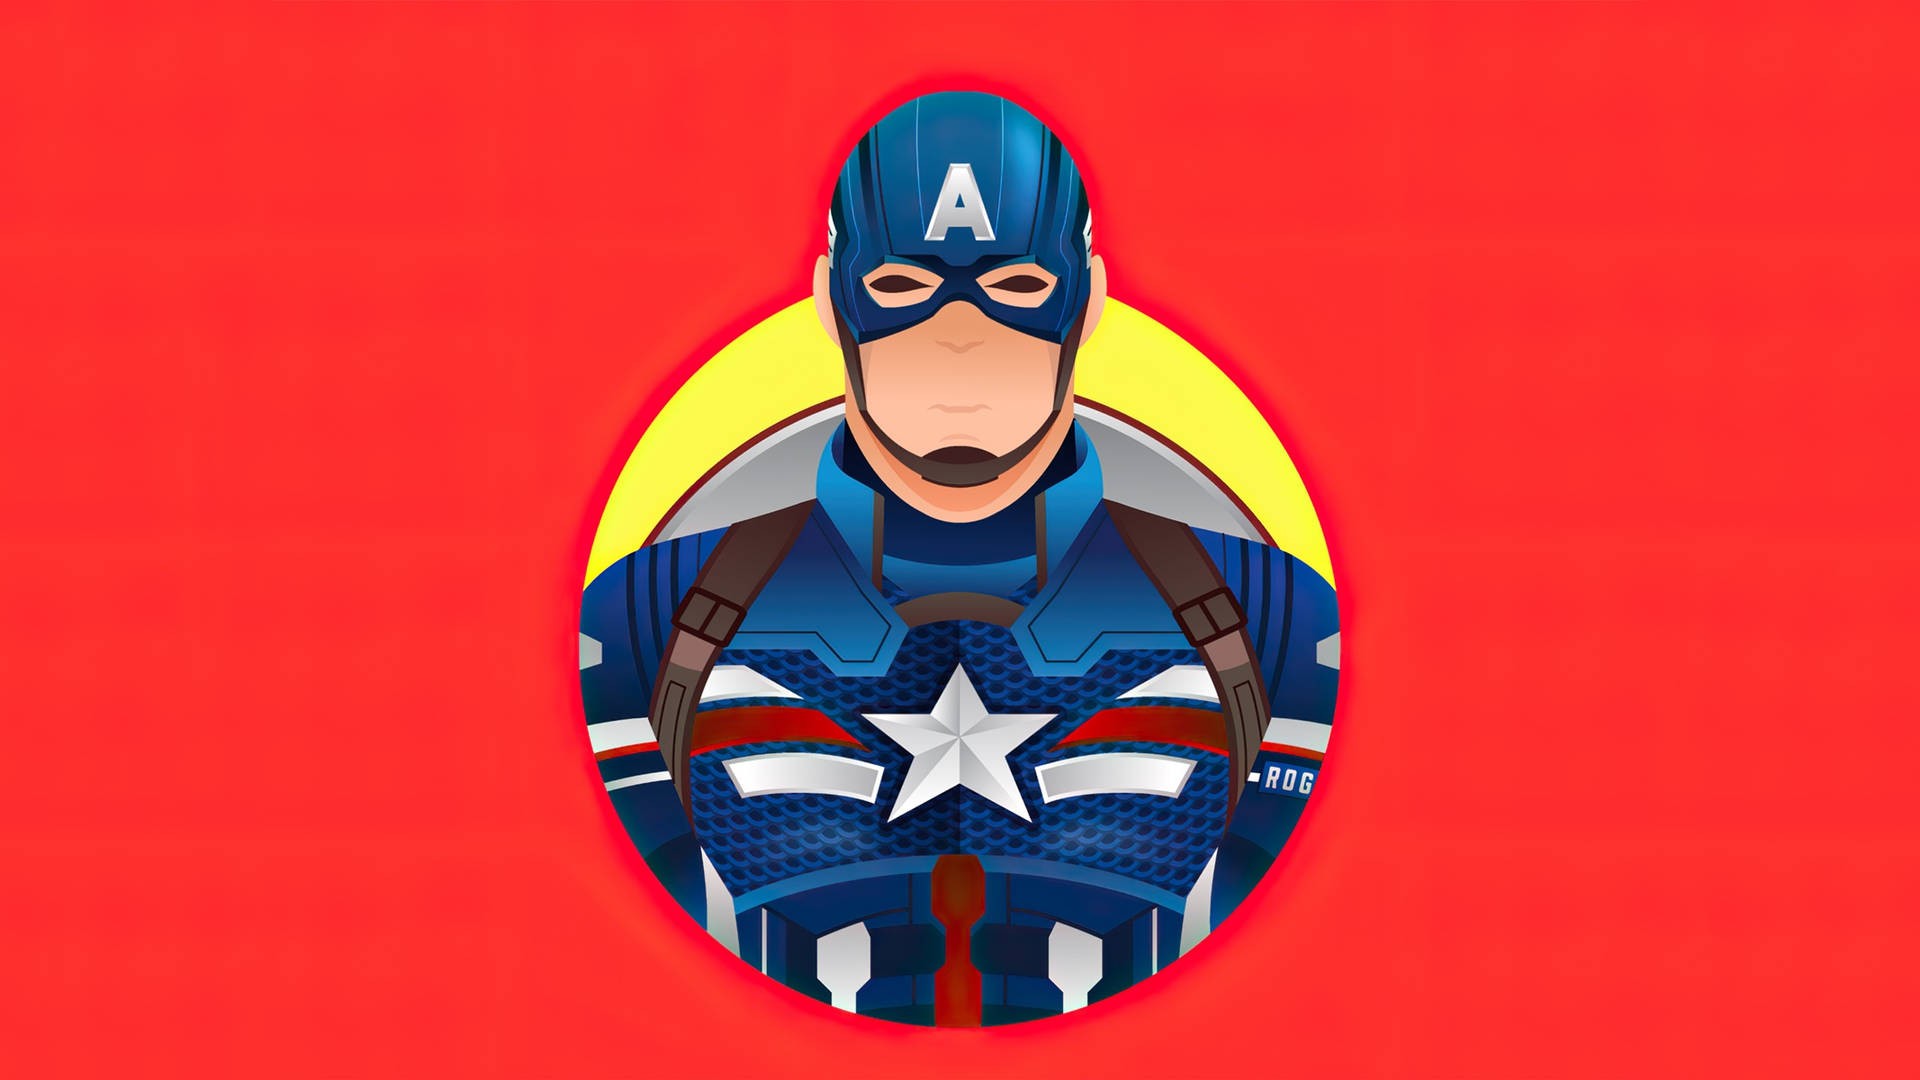 Download Captain America Superhero Minimalist Digital Art Wallpaper